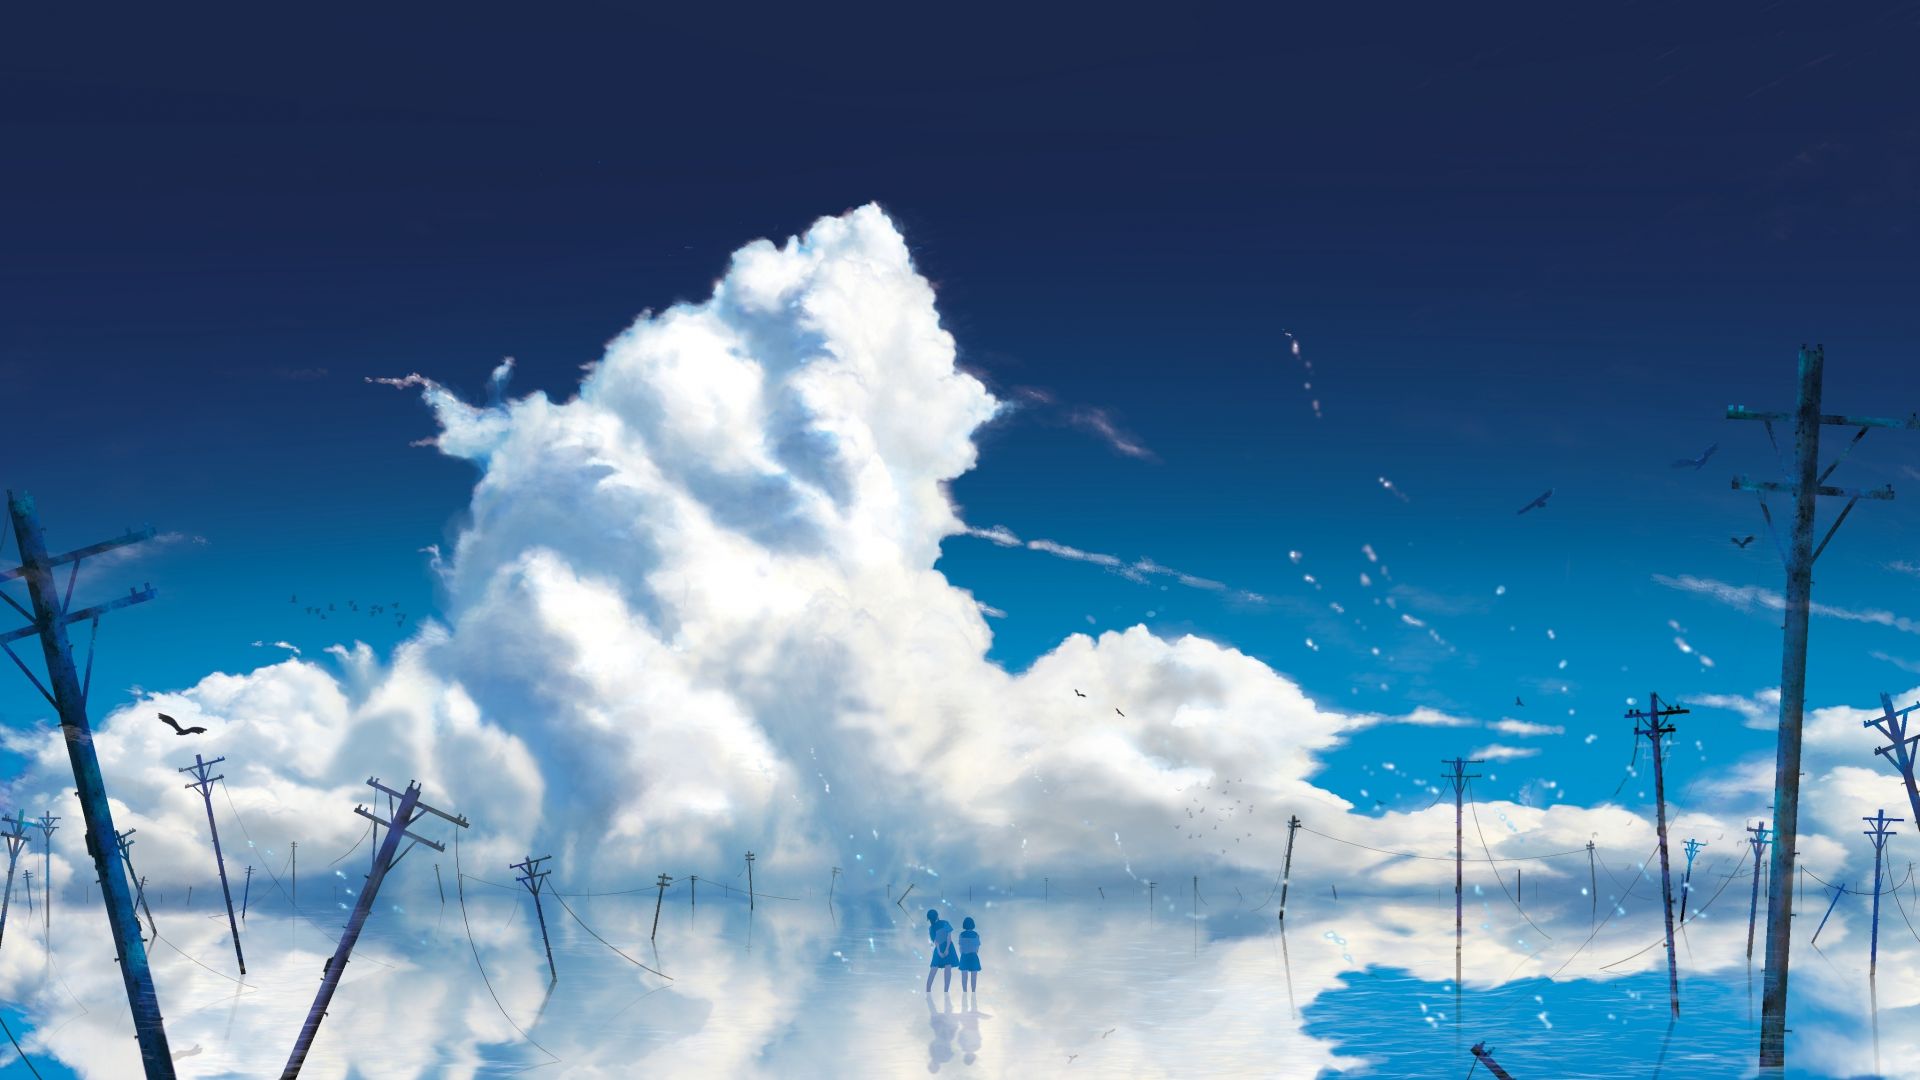 Anime 4k Desktop Wallpapers - Top Free Anime 4k Desktop Backgrounds ...